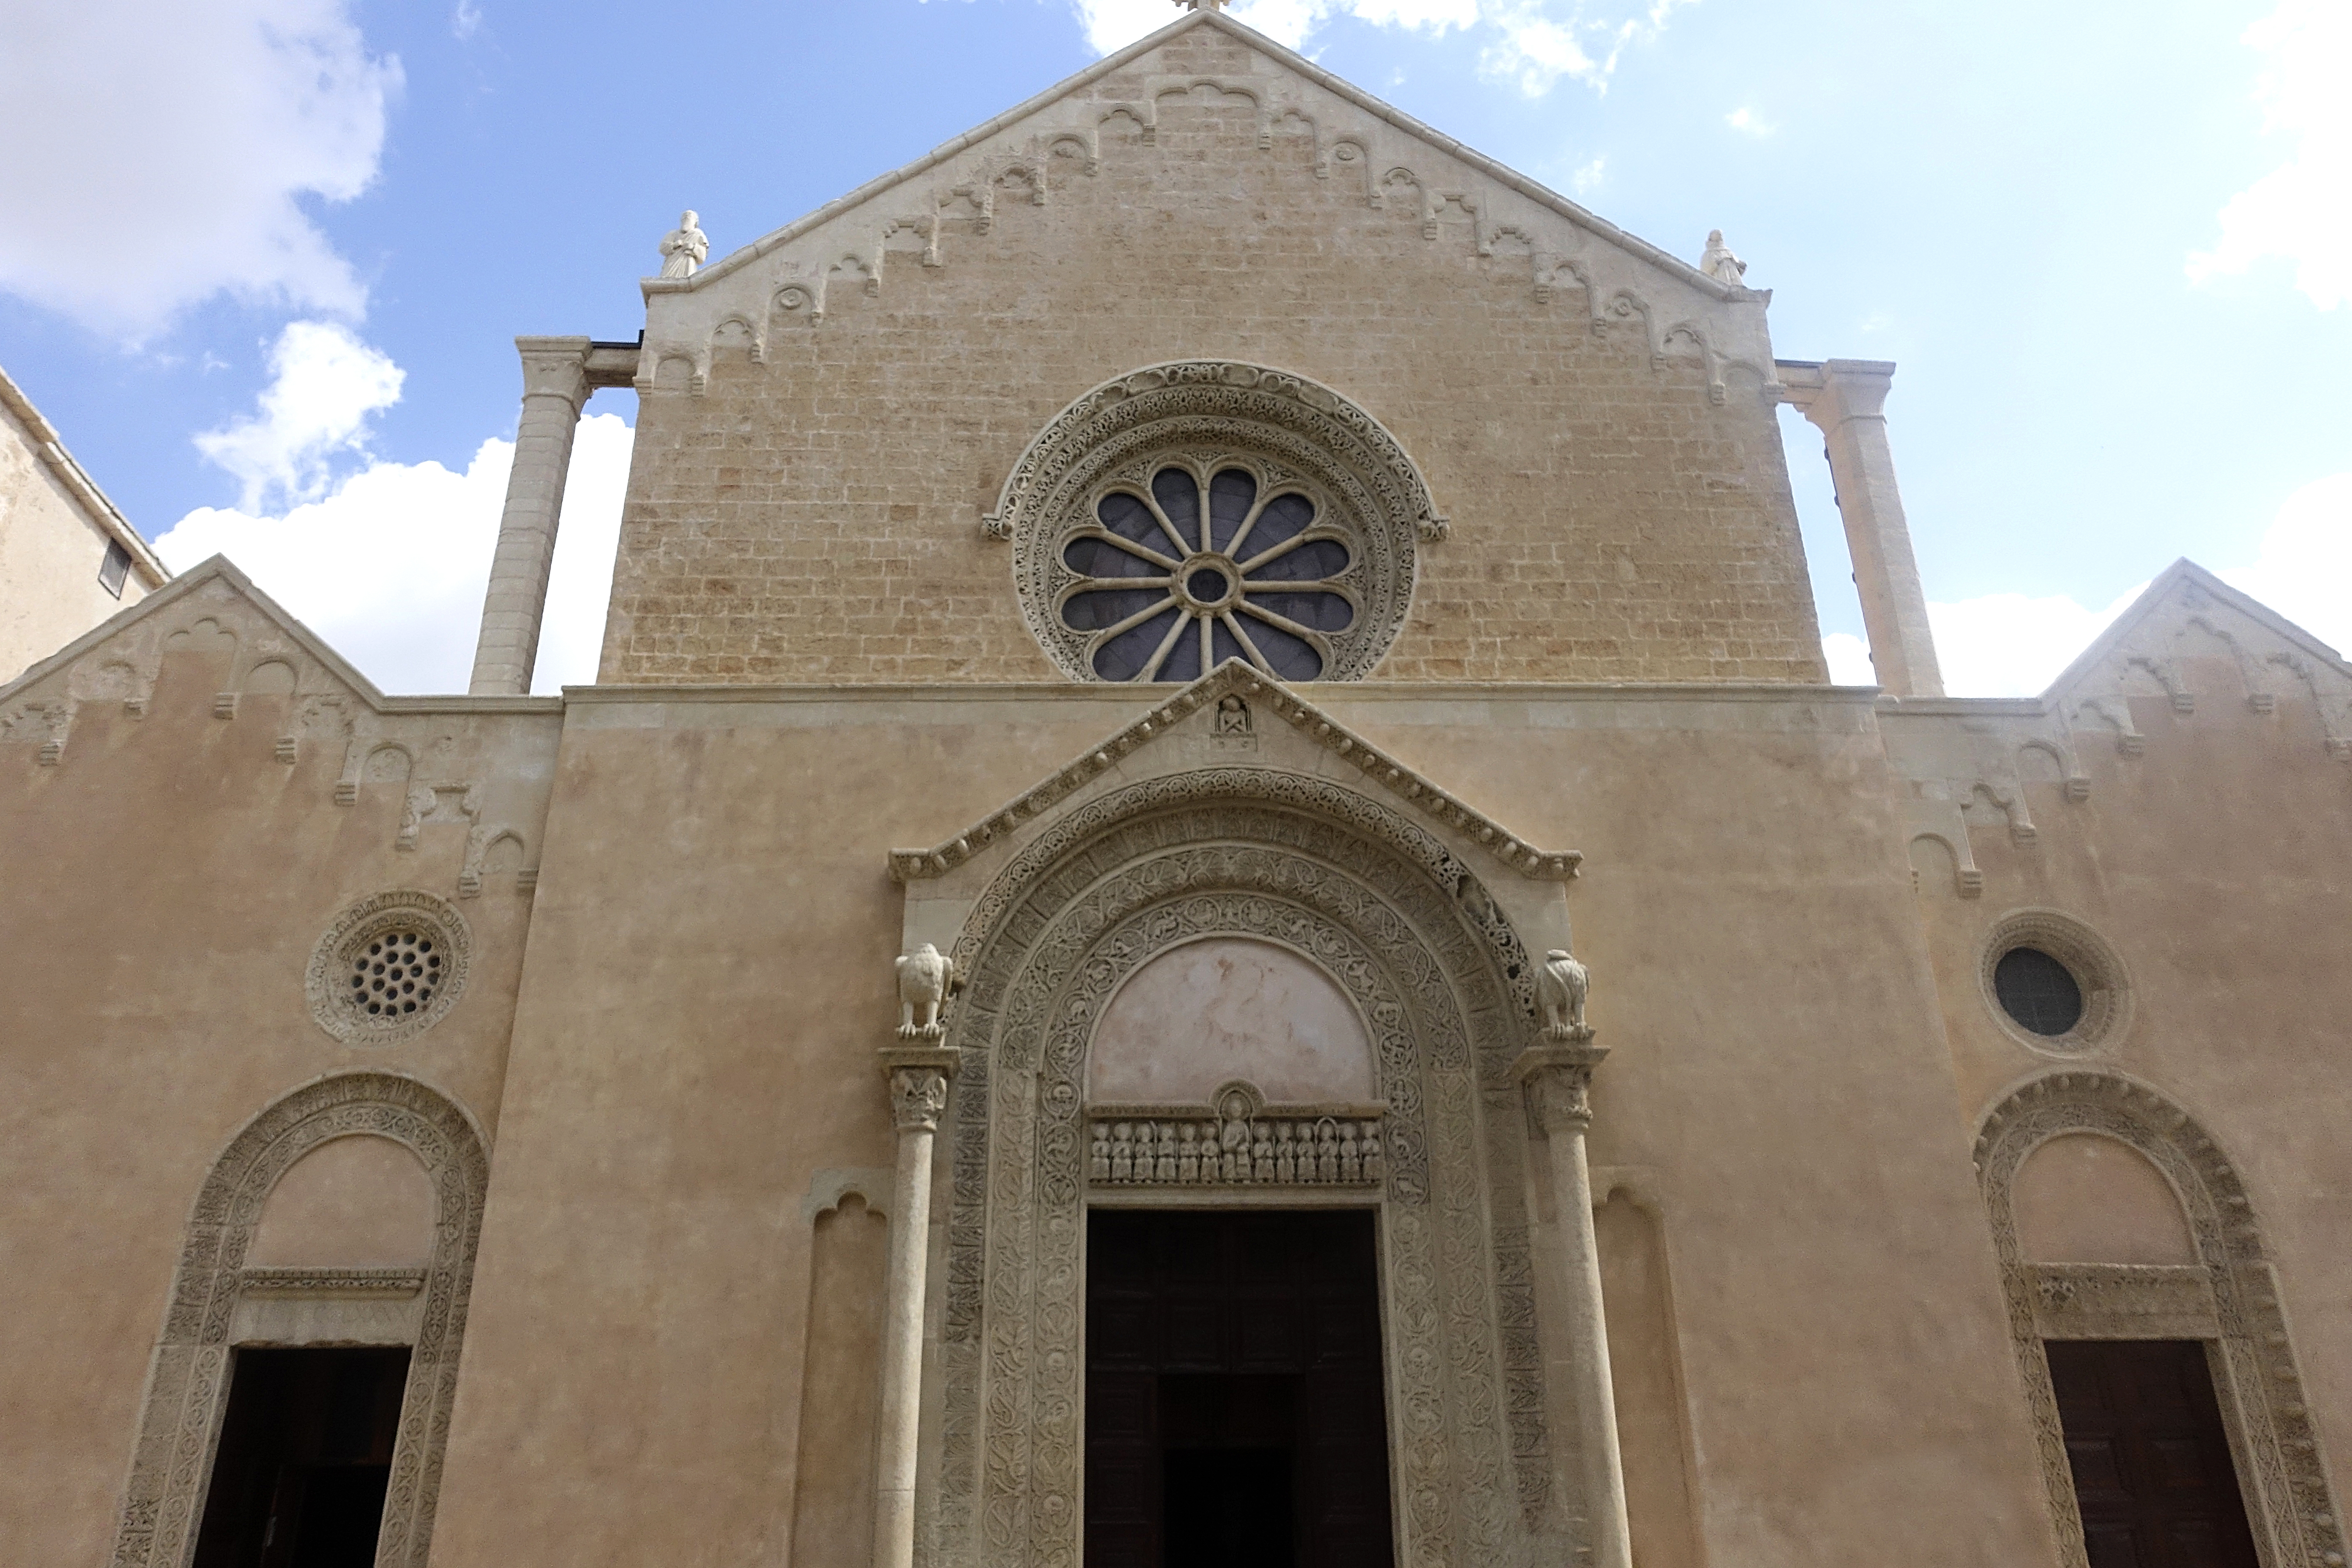 Lasagnolo9, Duomo di Santa Caterina d'Alessandria a Galatina, 19 August 2020